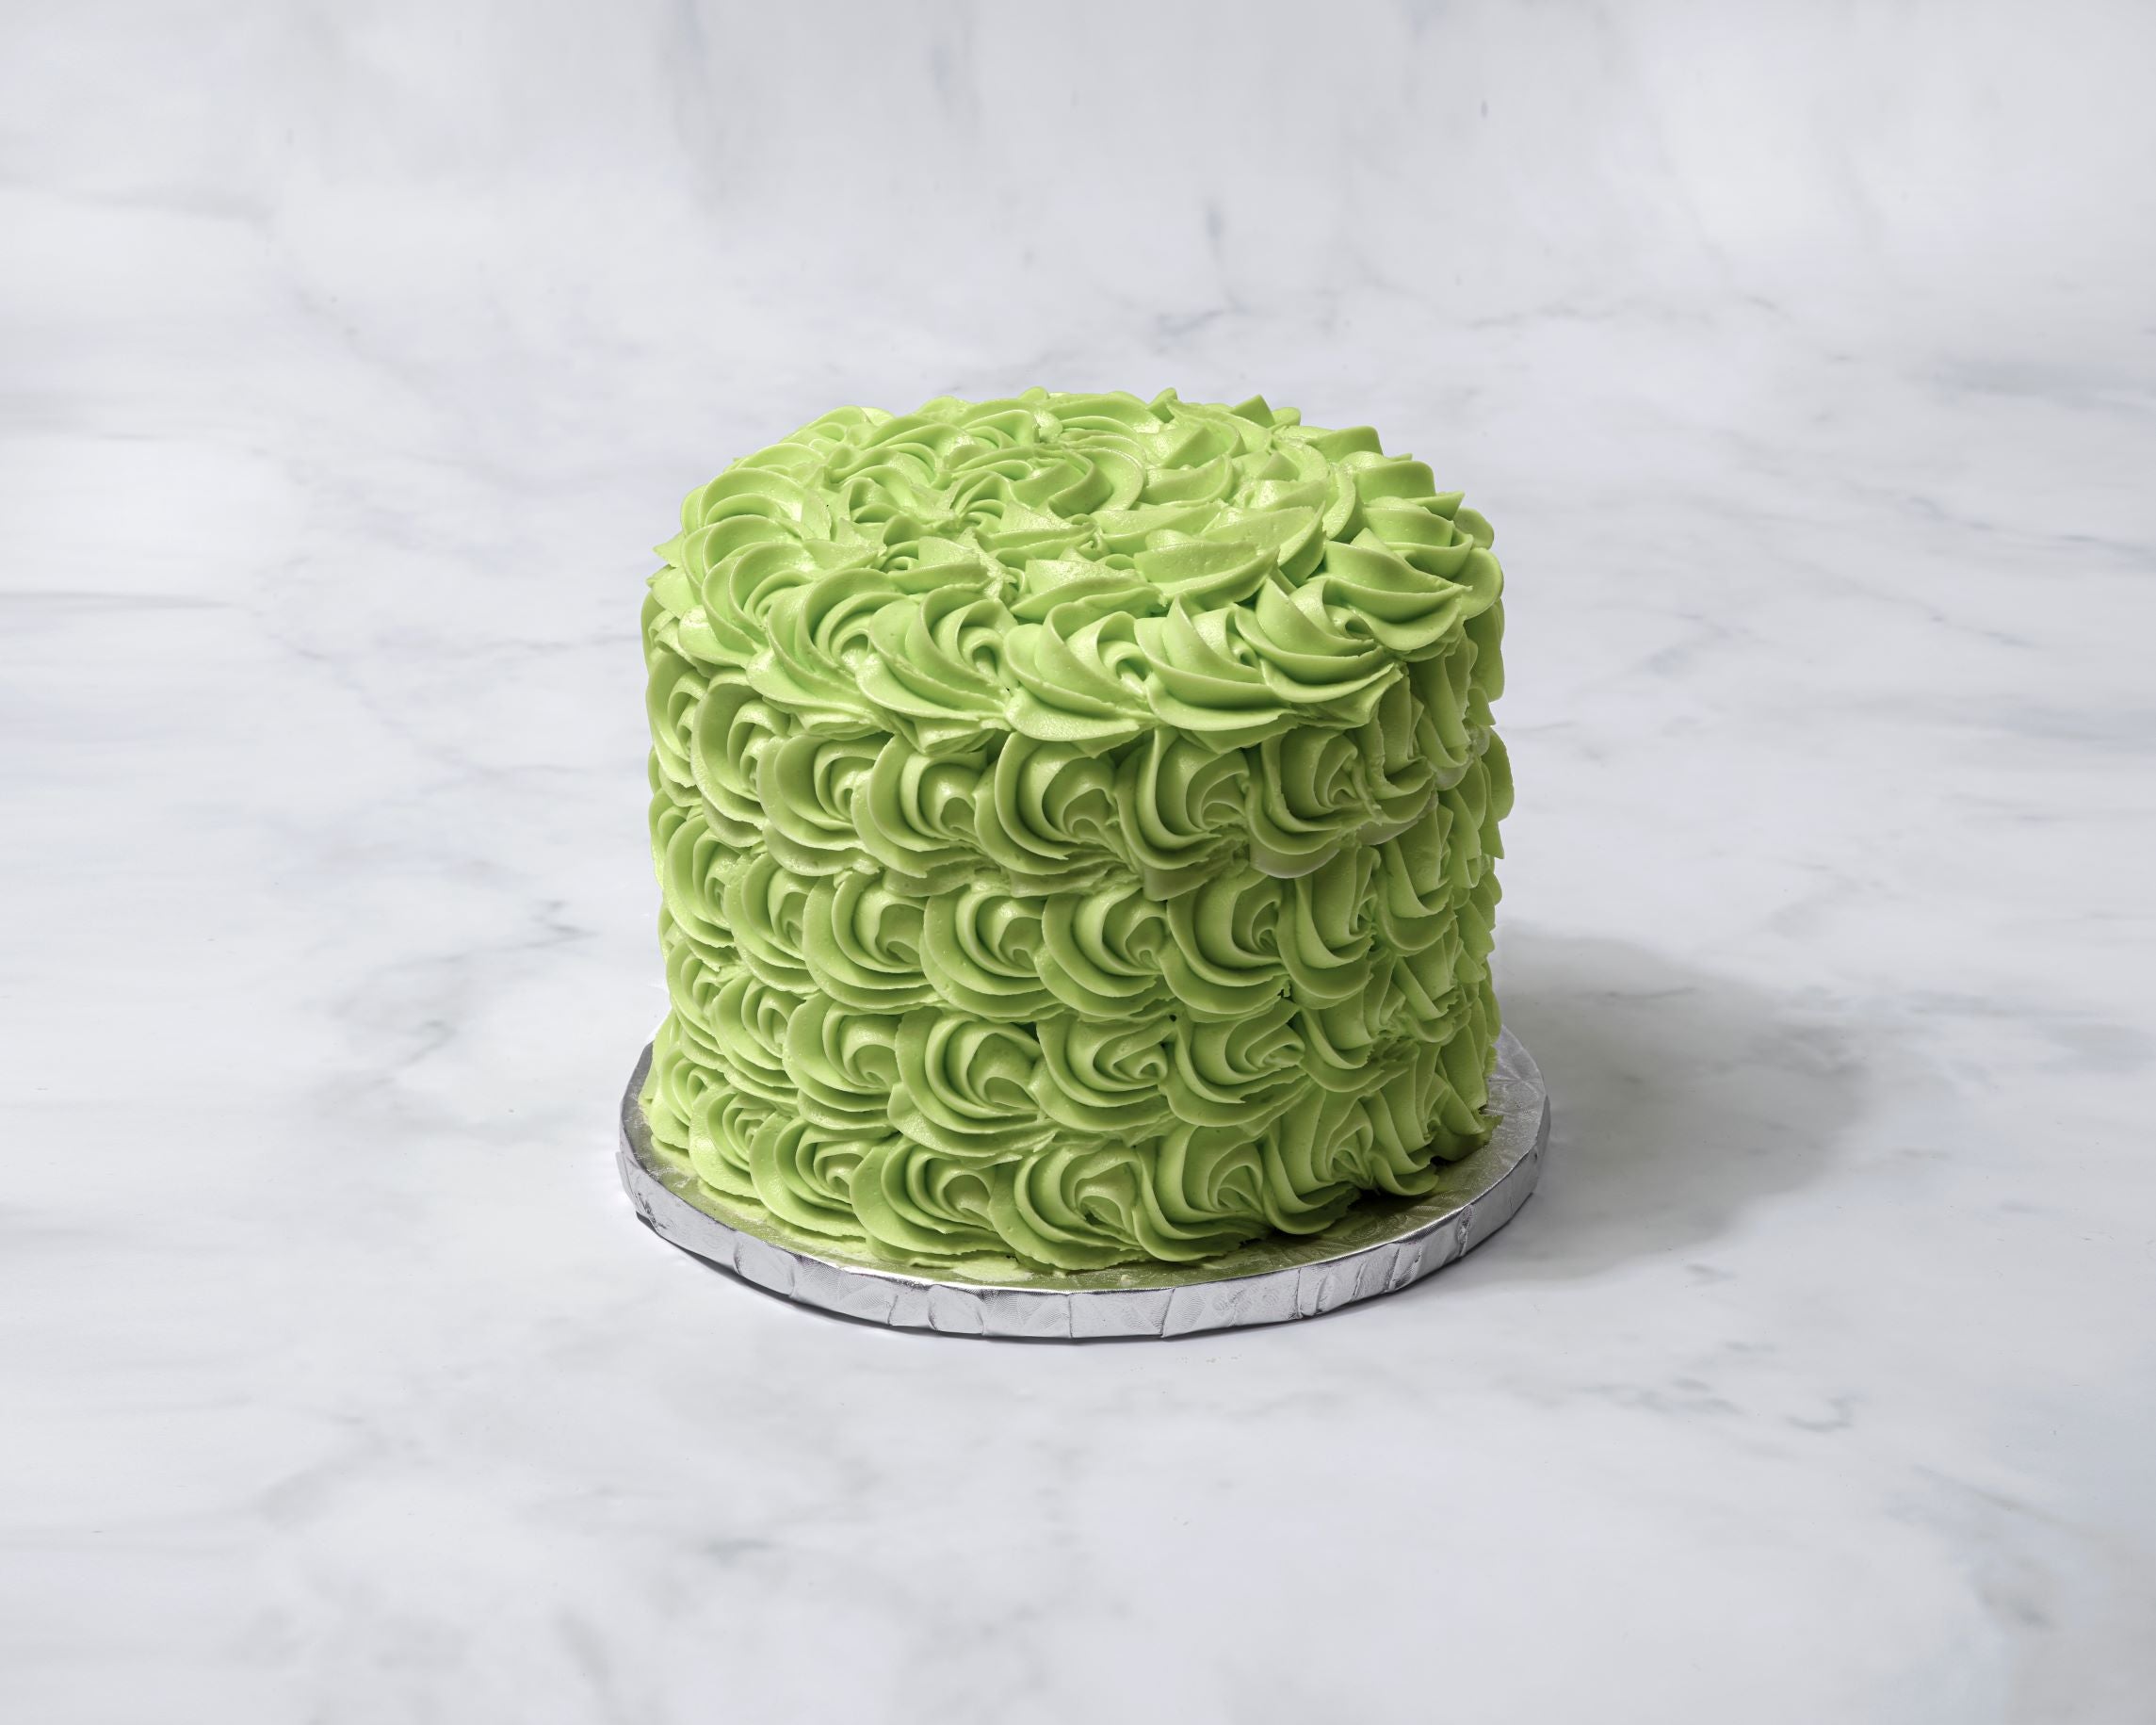 Round Wedding Cake with Light Green Textured Buttercream a… | Flickr